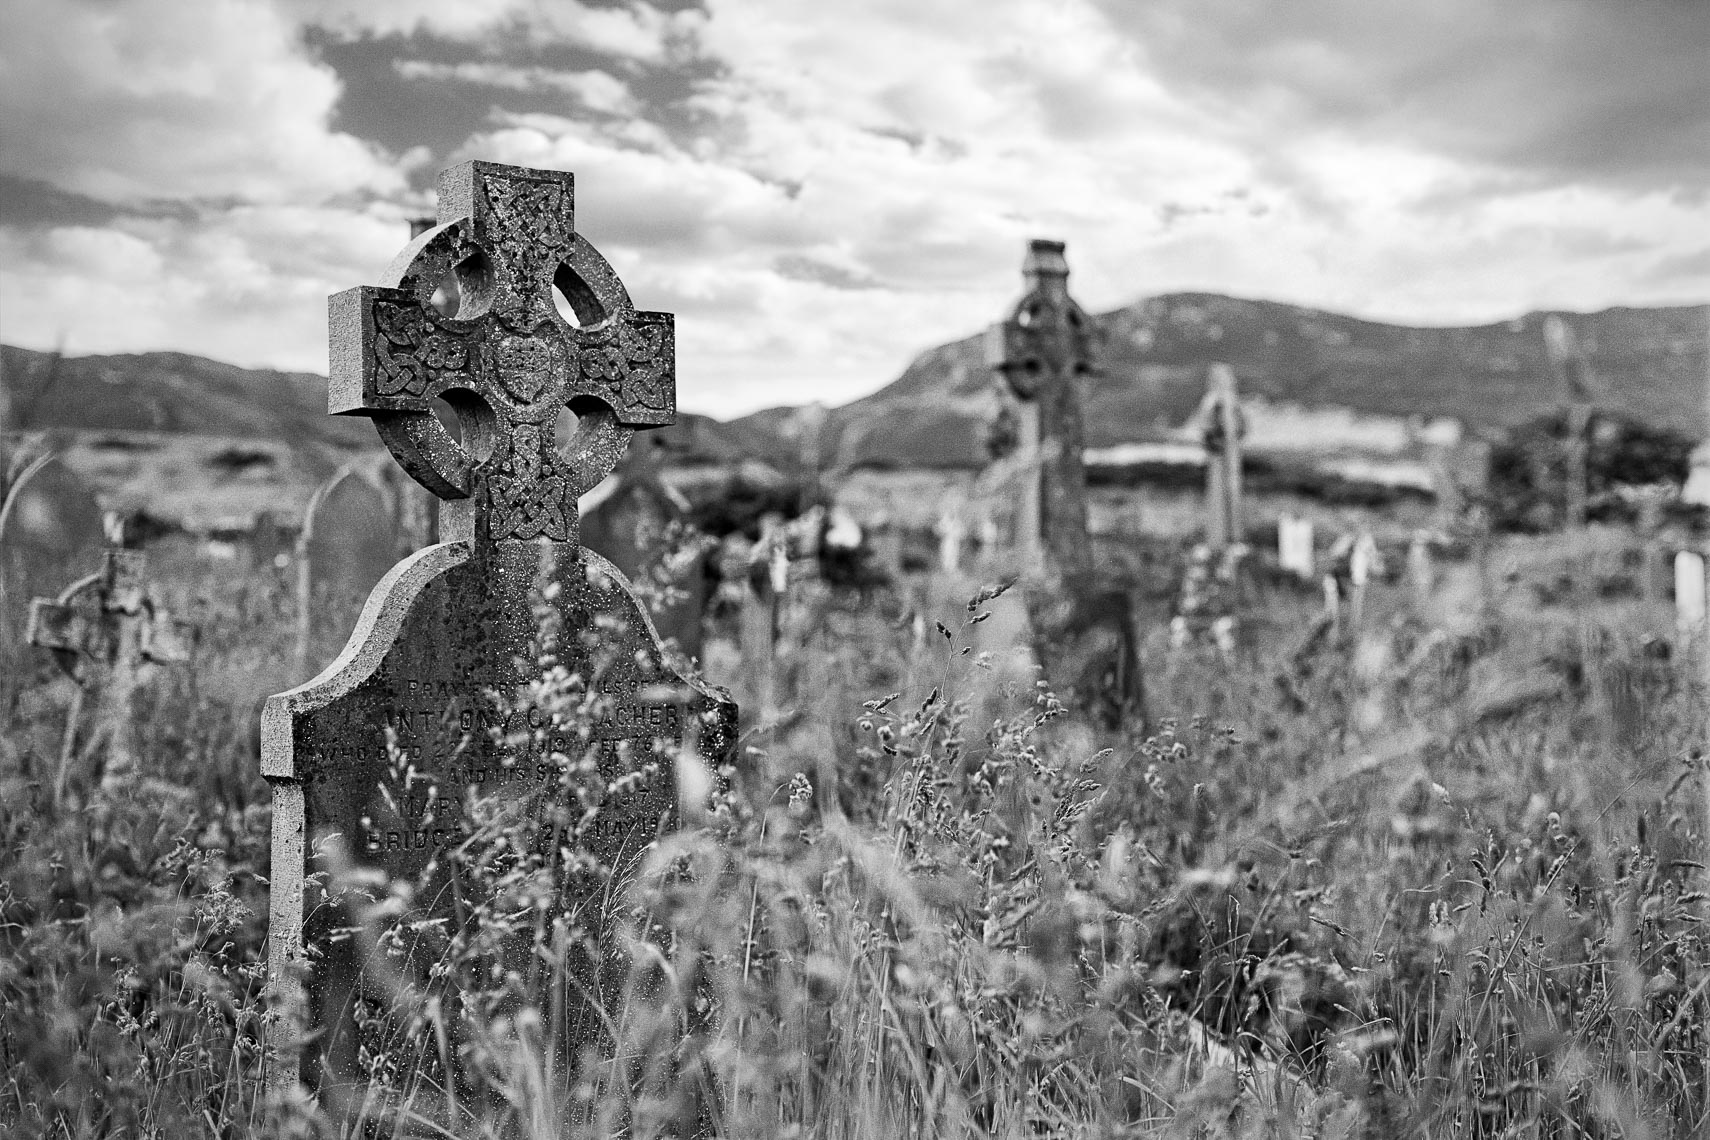 Famine gravestones, Achill Island, Co. Mayo